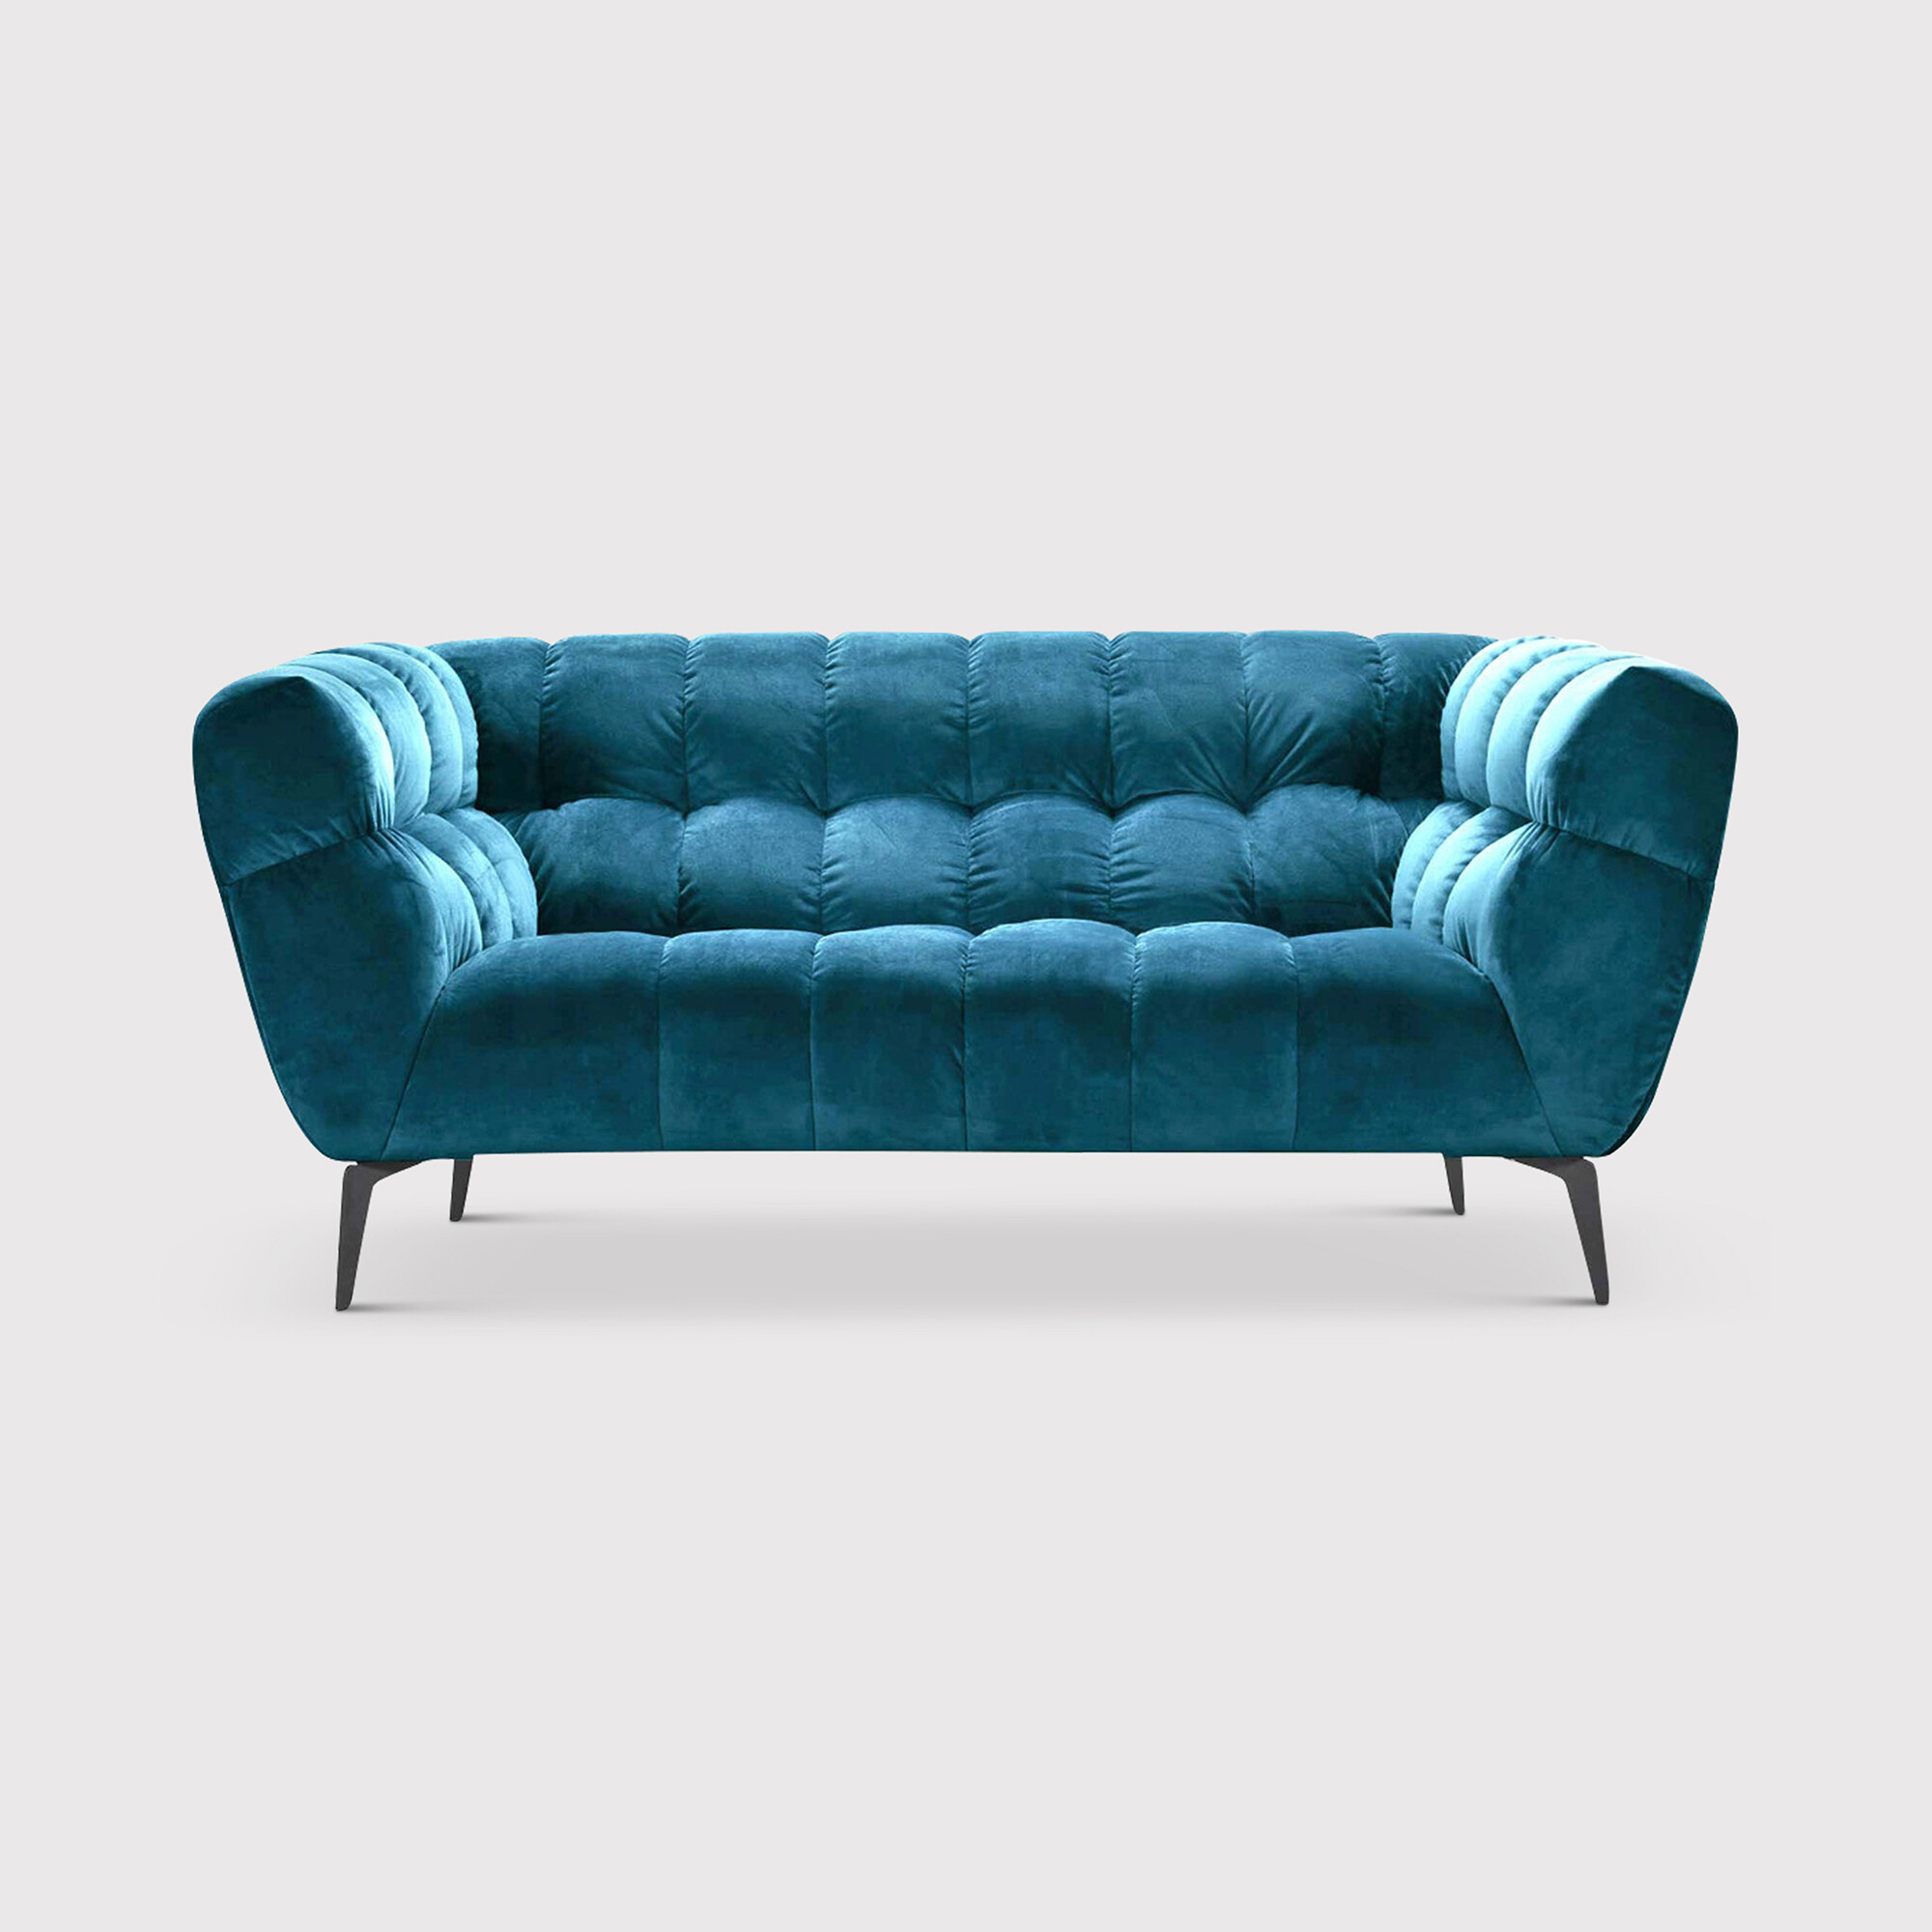 Azalea 2 Seater Sofa, Blue Fabric | Barker & Stonehouse